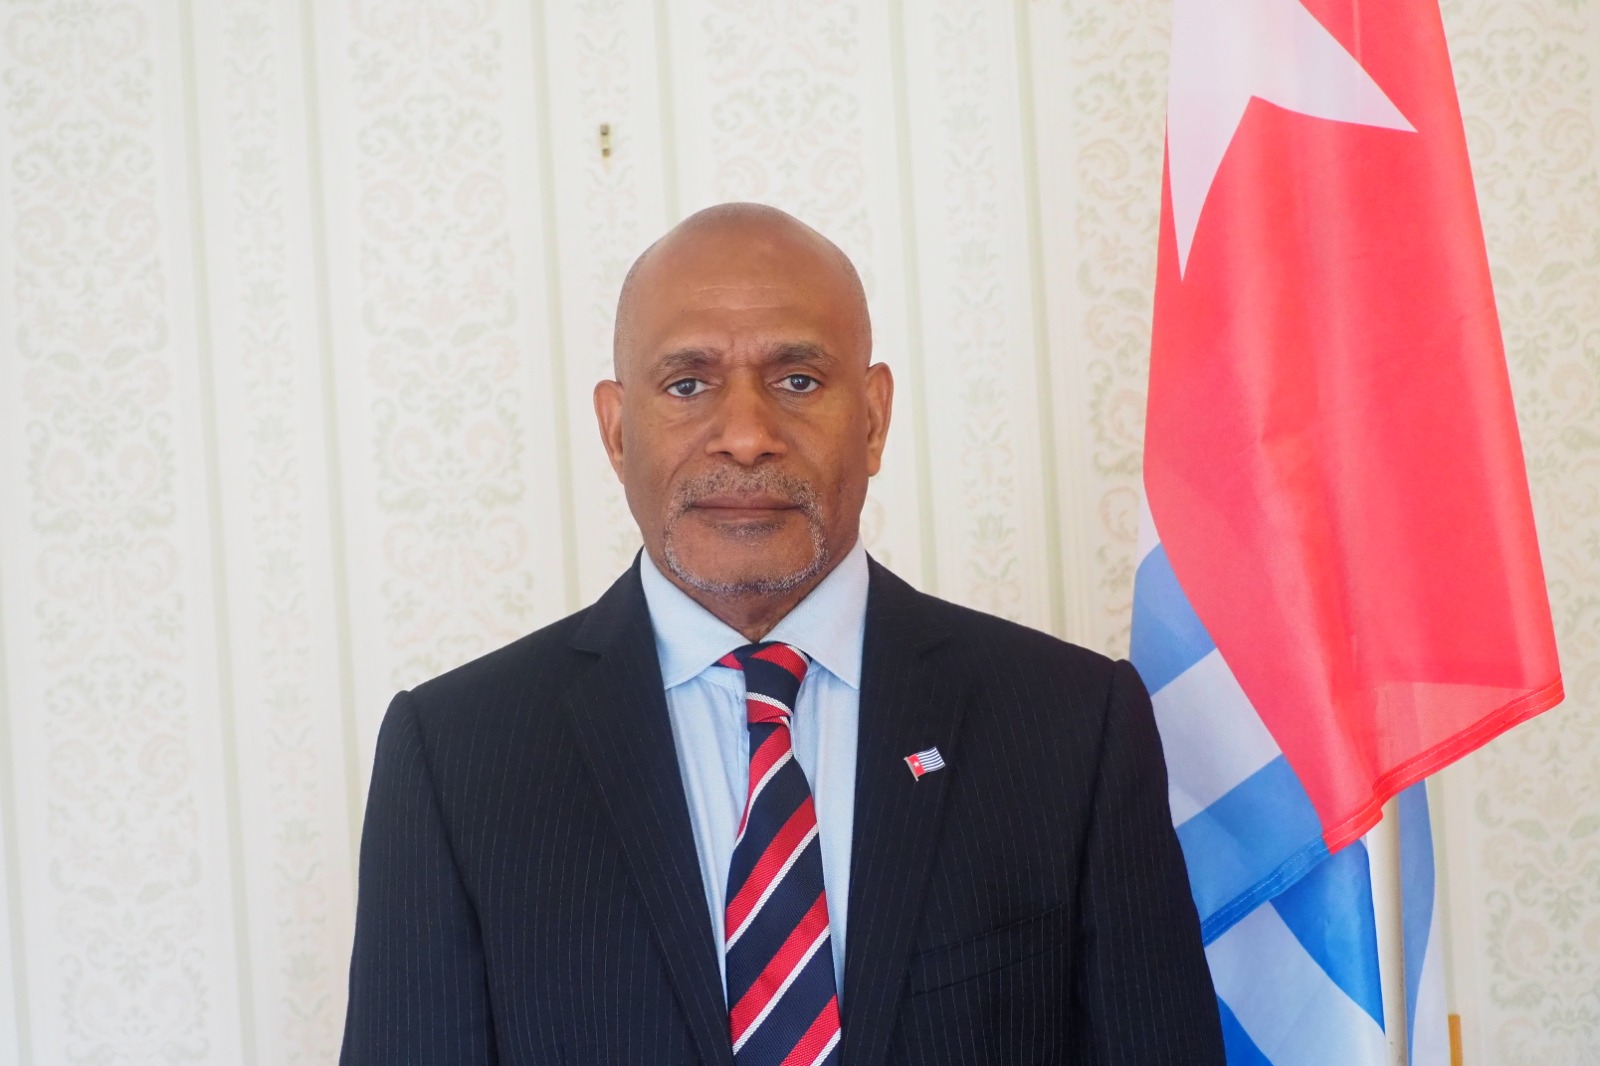 President Wenda: The ULMWP Agenda is West Papua’s path to liberation